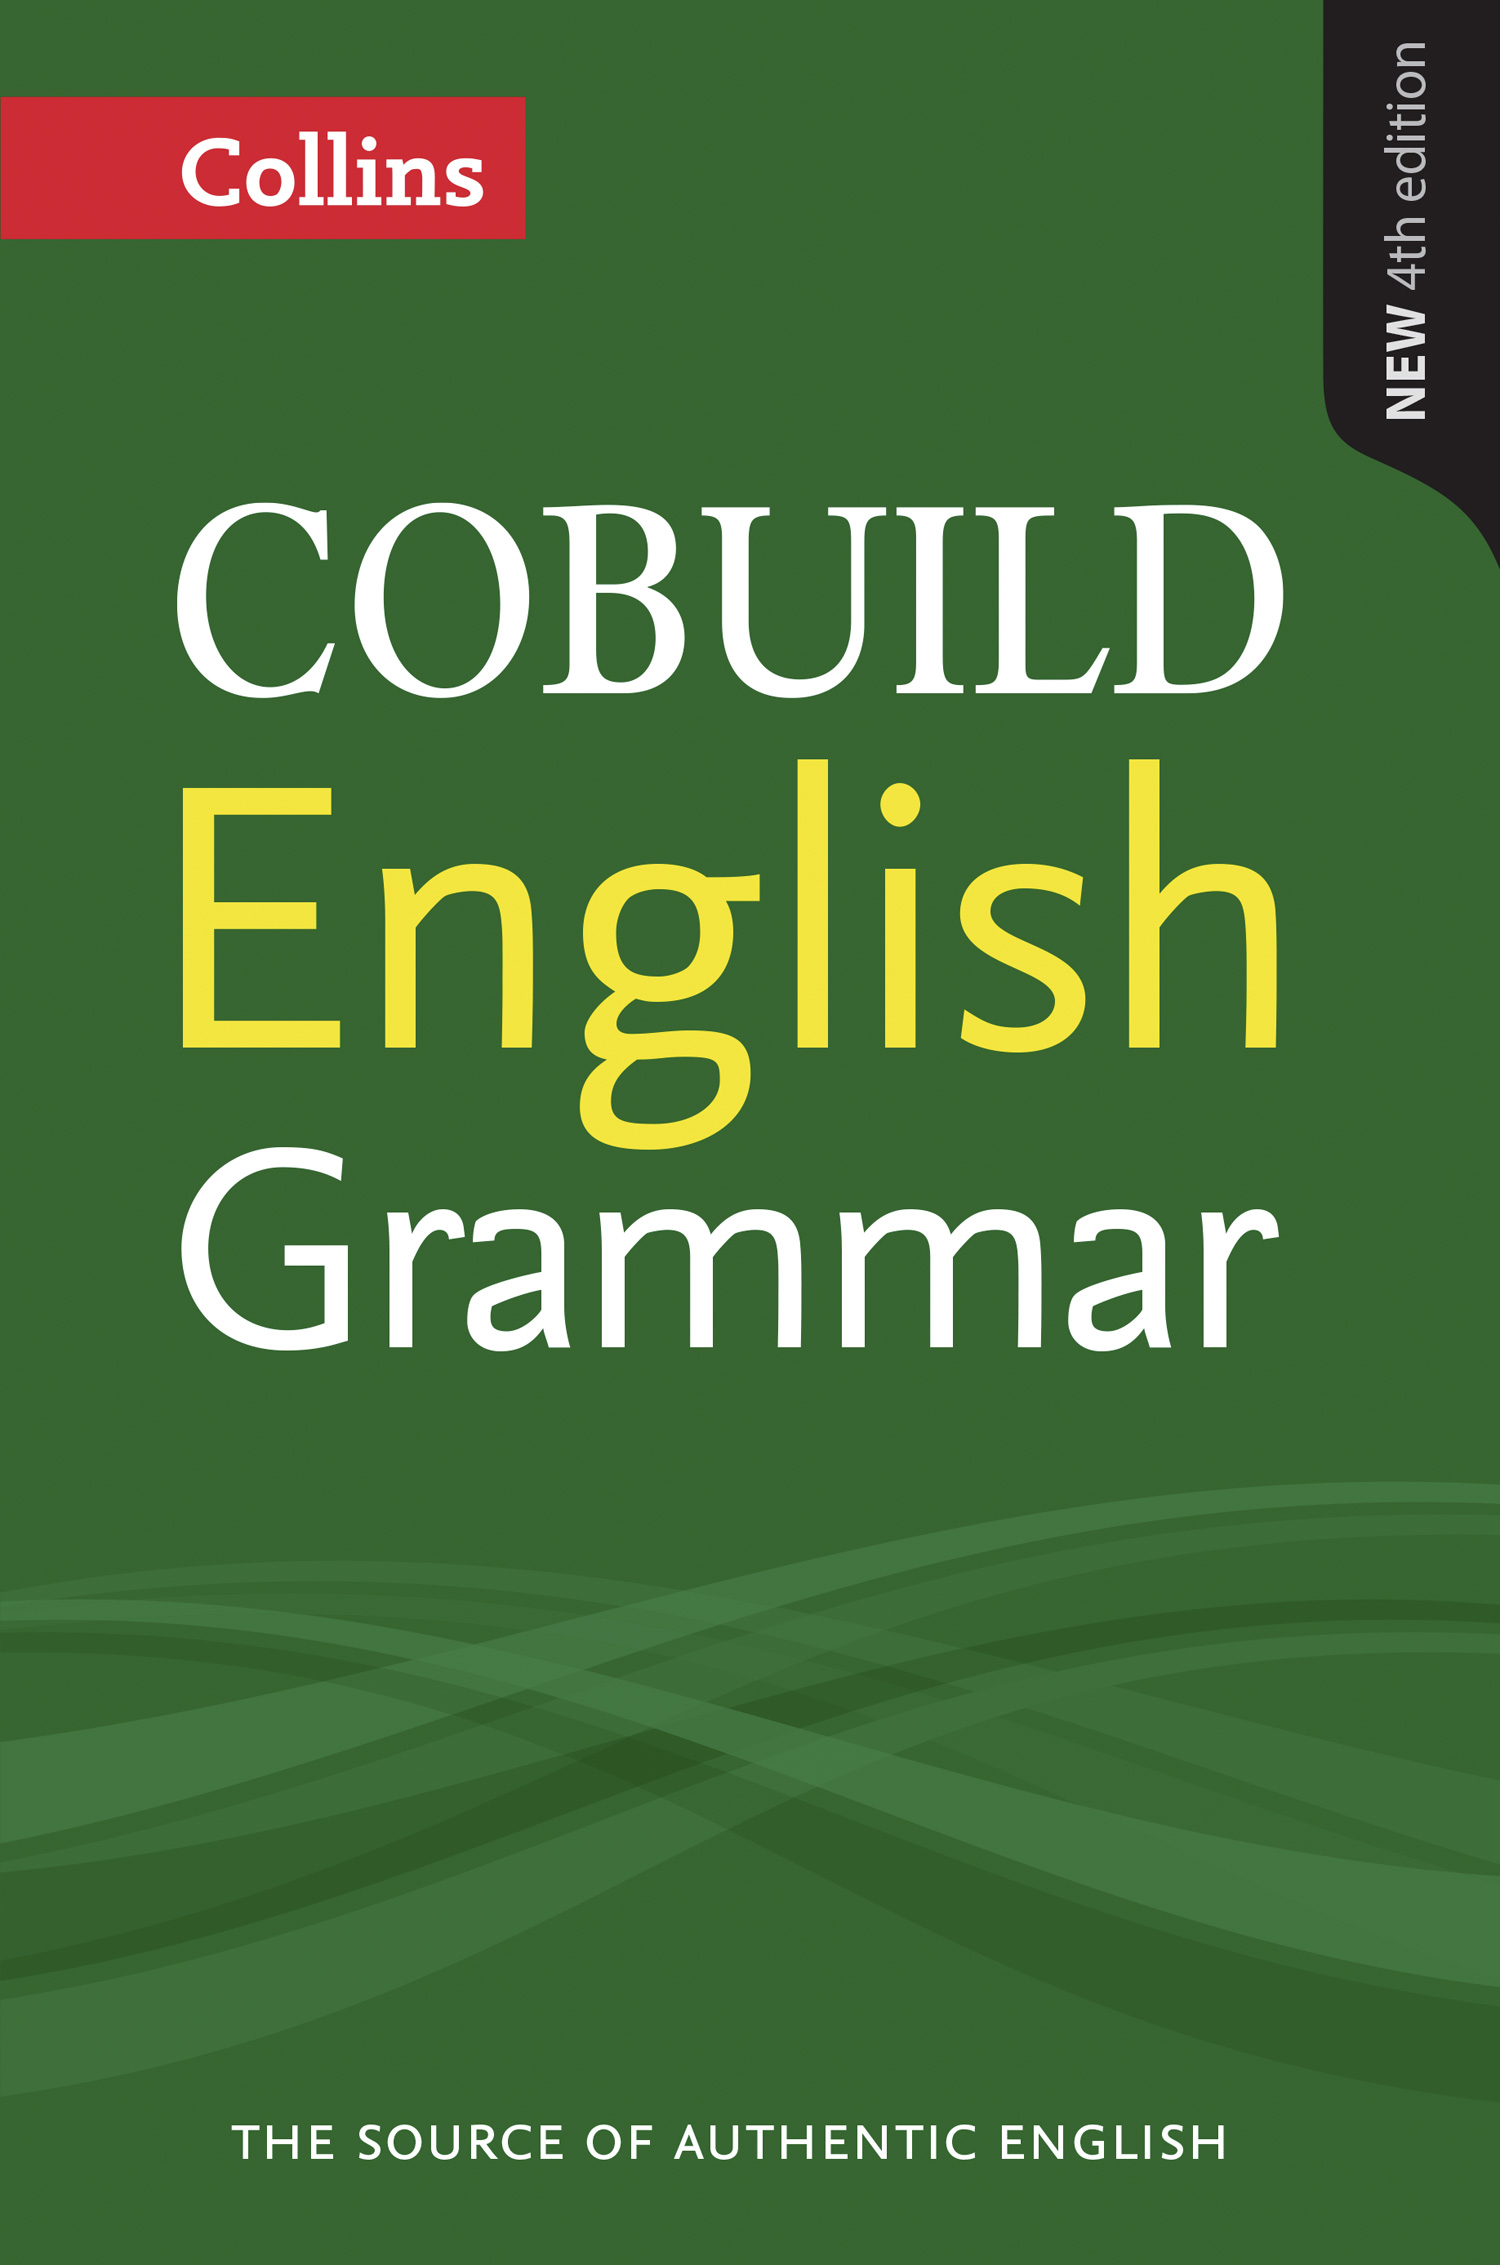 Collins COBUILD Grammar